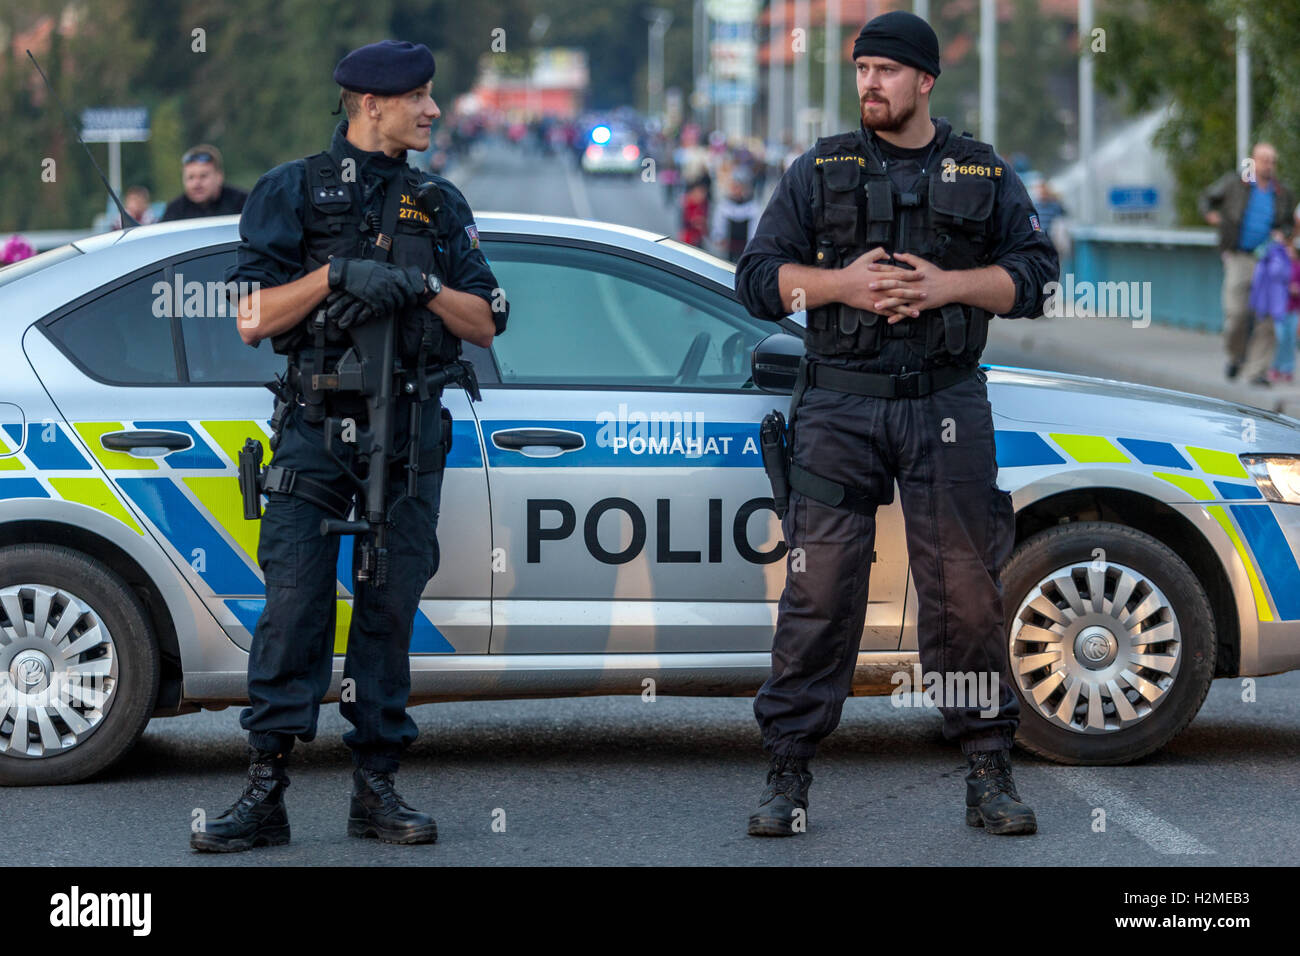 Czech Police policemen in uniform, car, Czech Republic Stock Photo